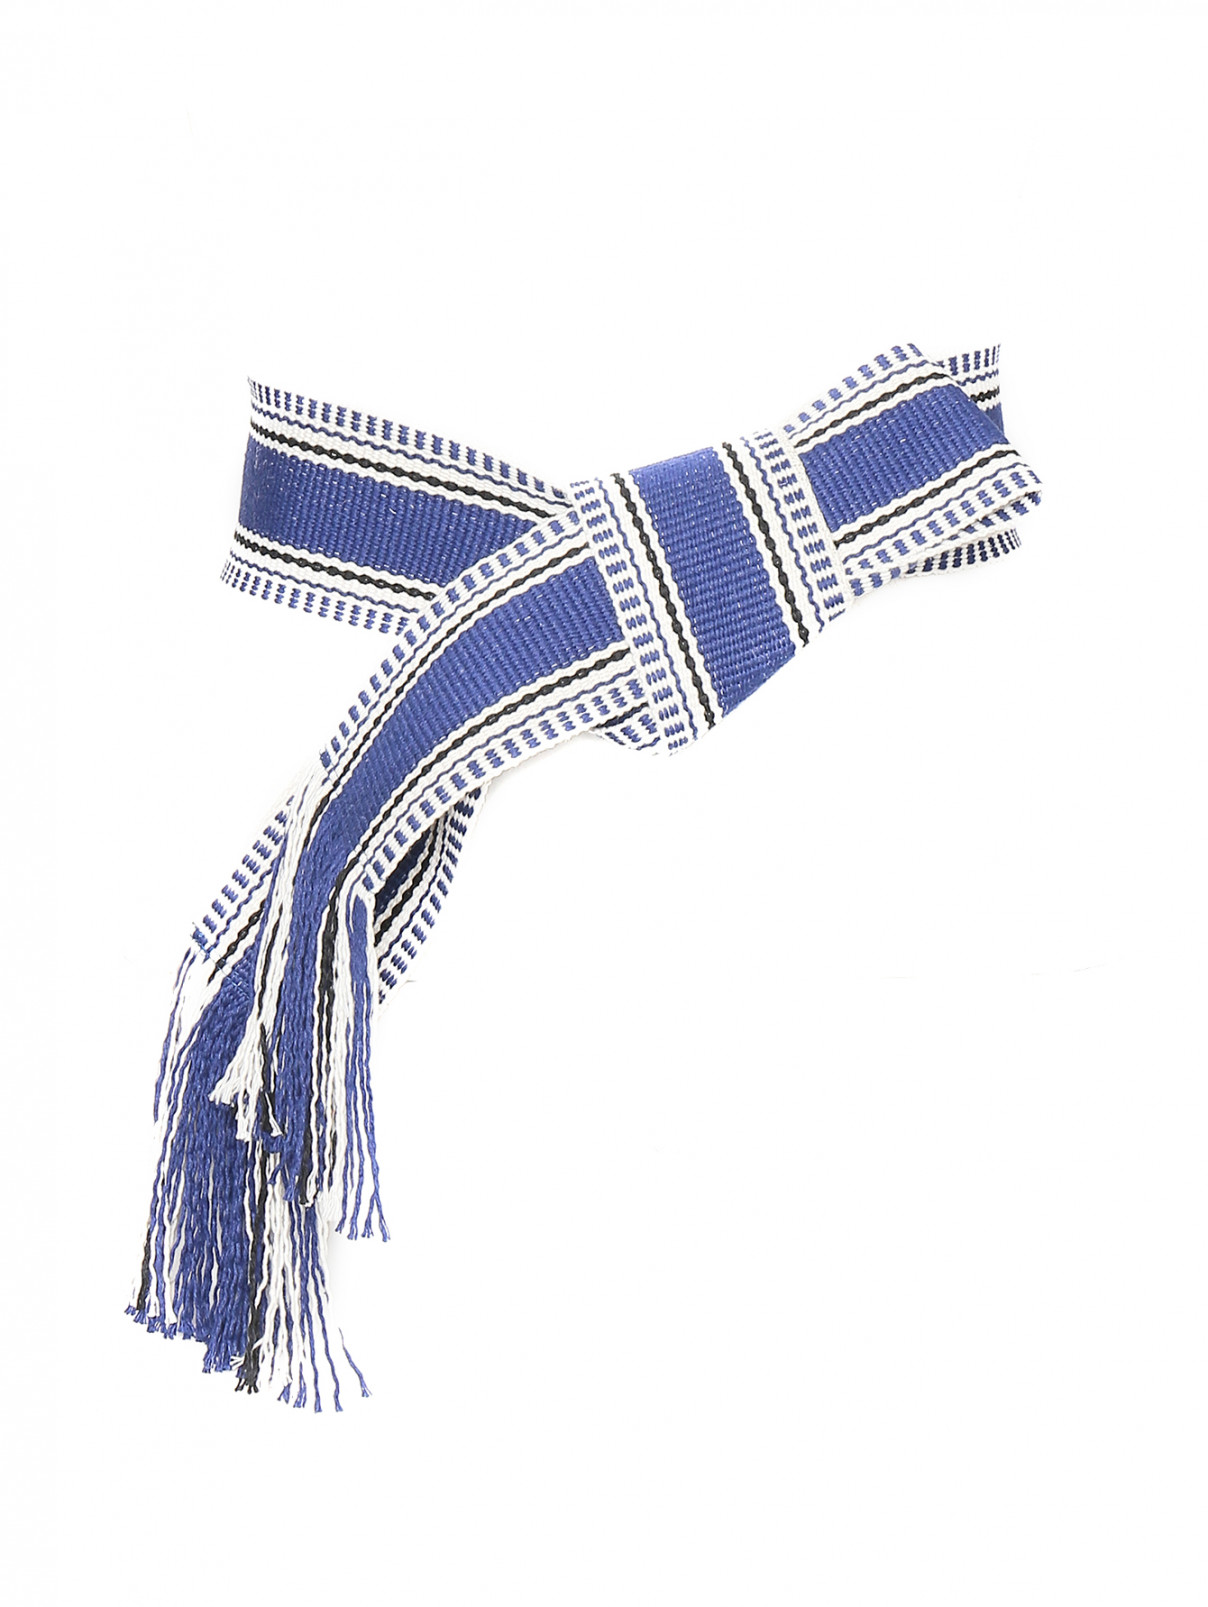 Пояс из текстиля с узором и бахромой Max&Co  –  Общий вид  – Цвет:  Синий